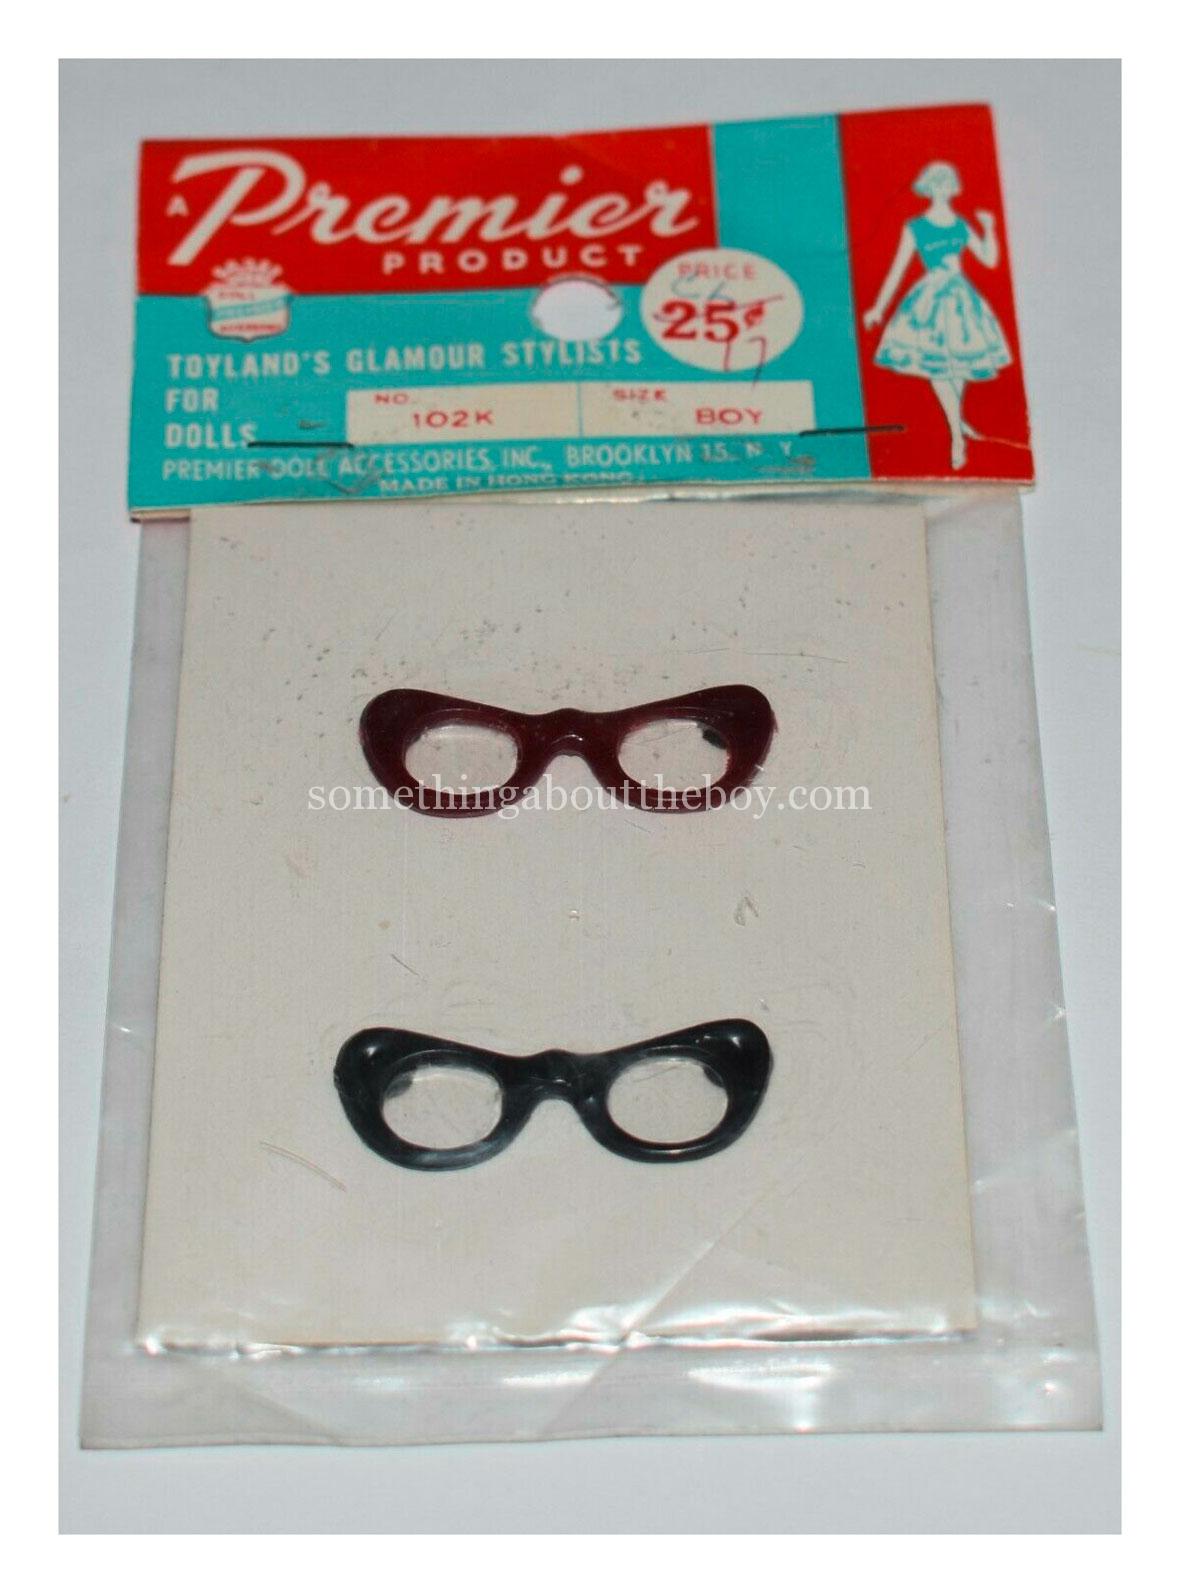 K102 Glasses by Premier